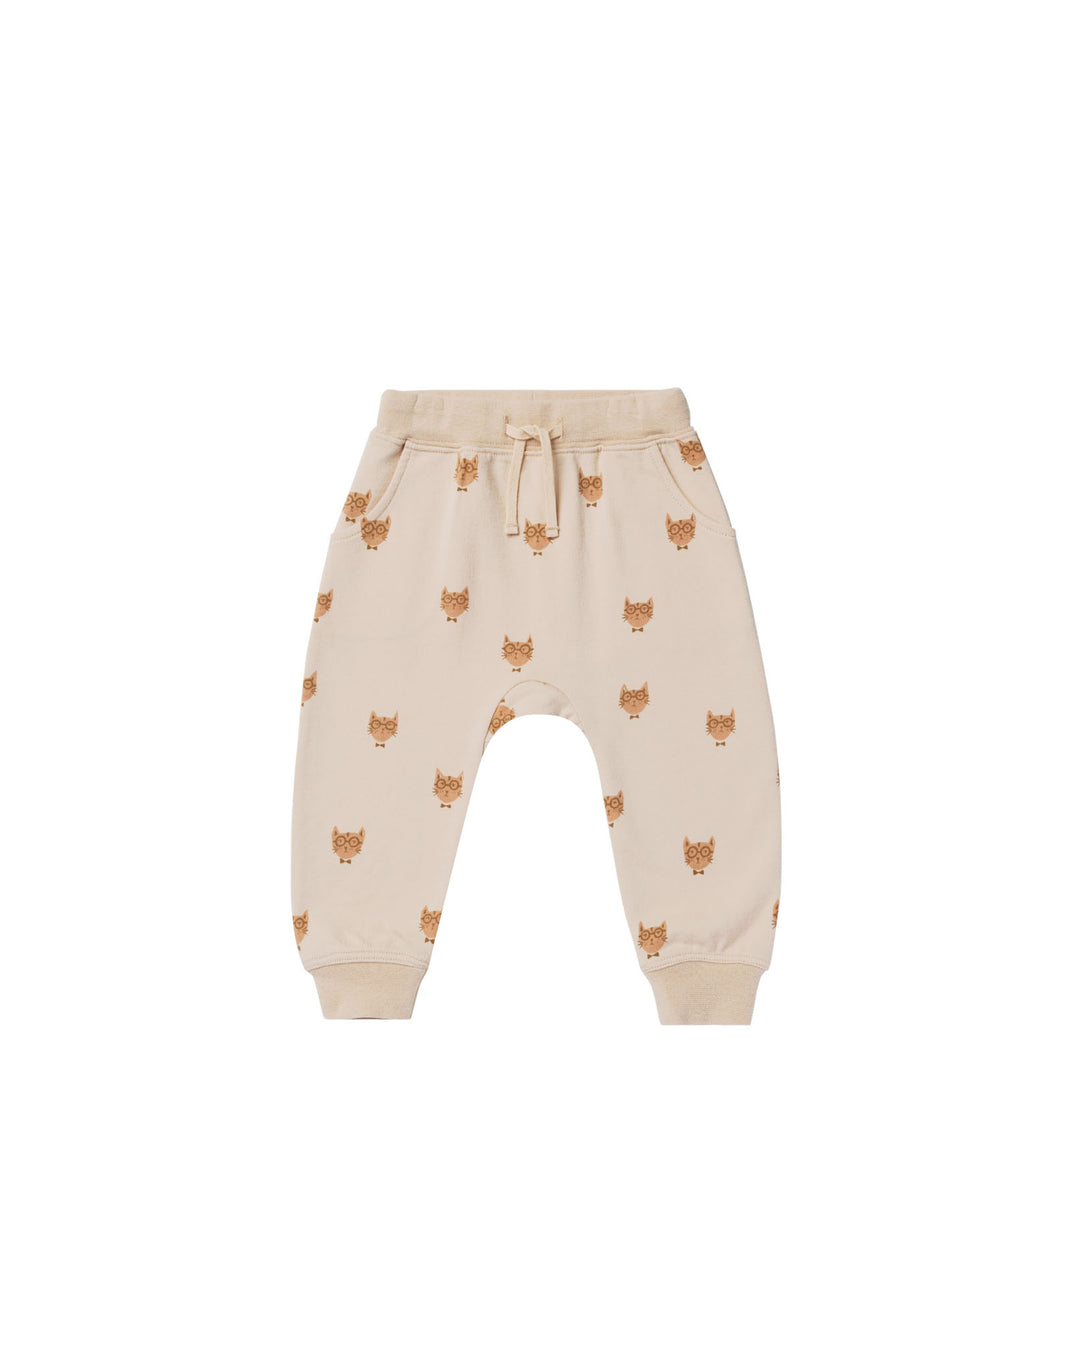 Rylee + Cru Cool Cat Sweatpants, Antique |Mockingbird Baby & Kids